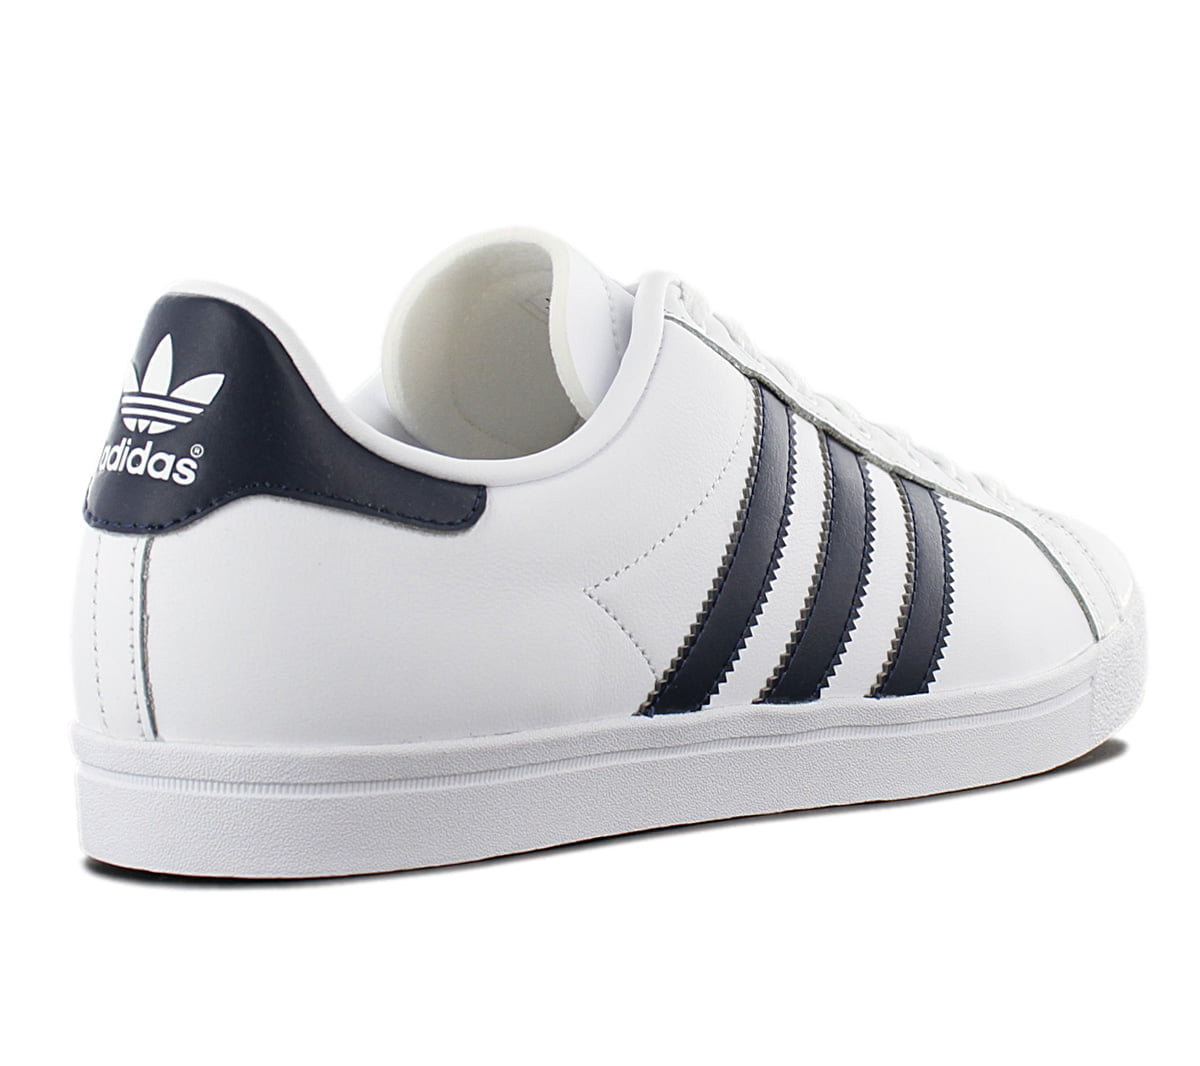 Adidas coast star ee9950 men's shoes | Super Supplement